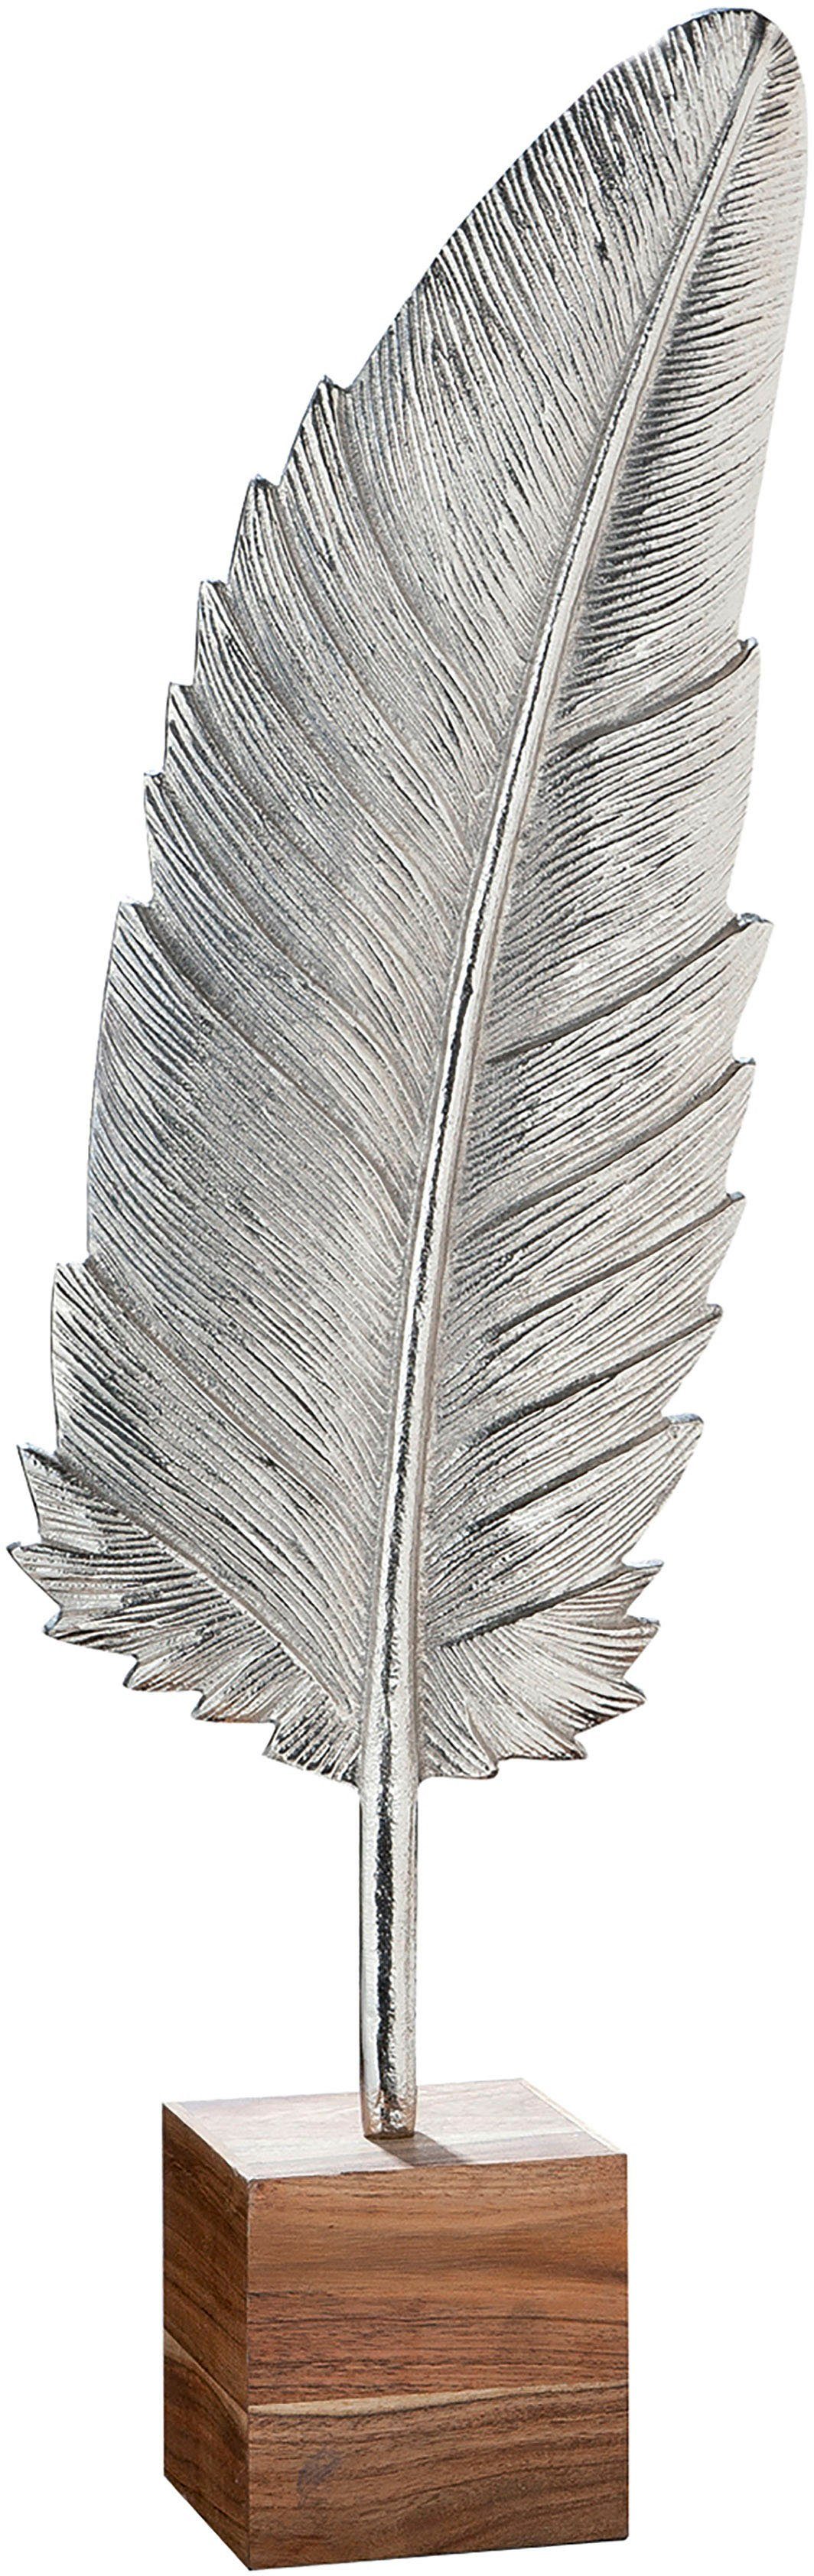 GILDE Deco-object Sculptuur veer op basis, zilver Hoogte 65,5 cm van metaal, voet van hout, woonkamer (1 stuk)